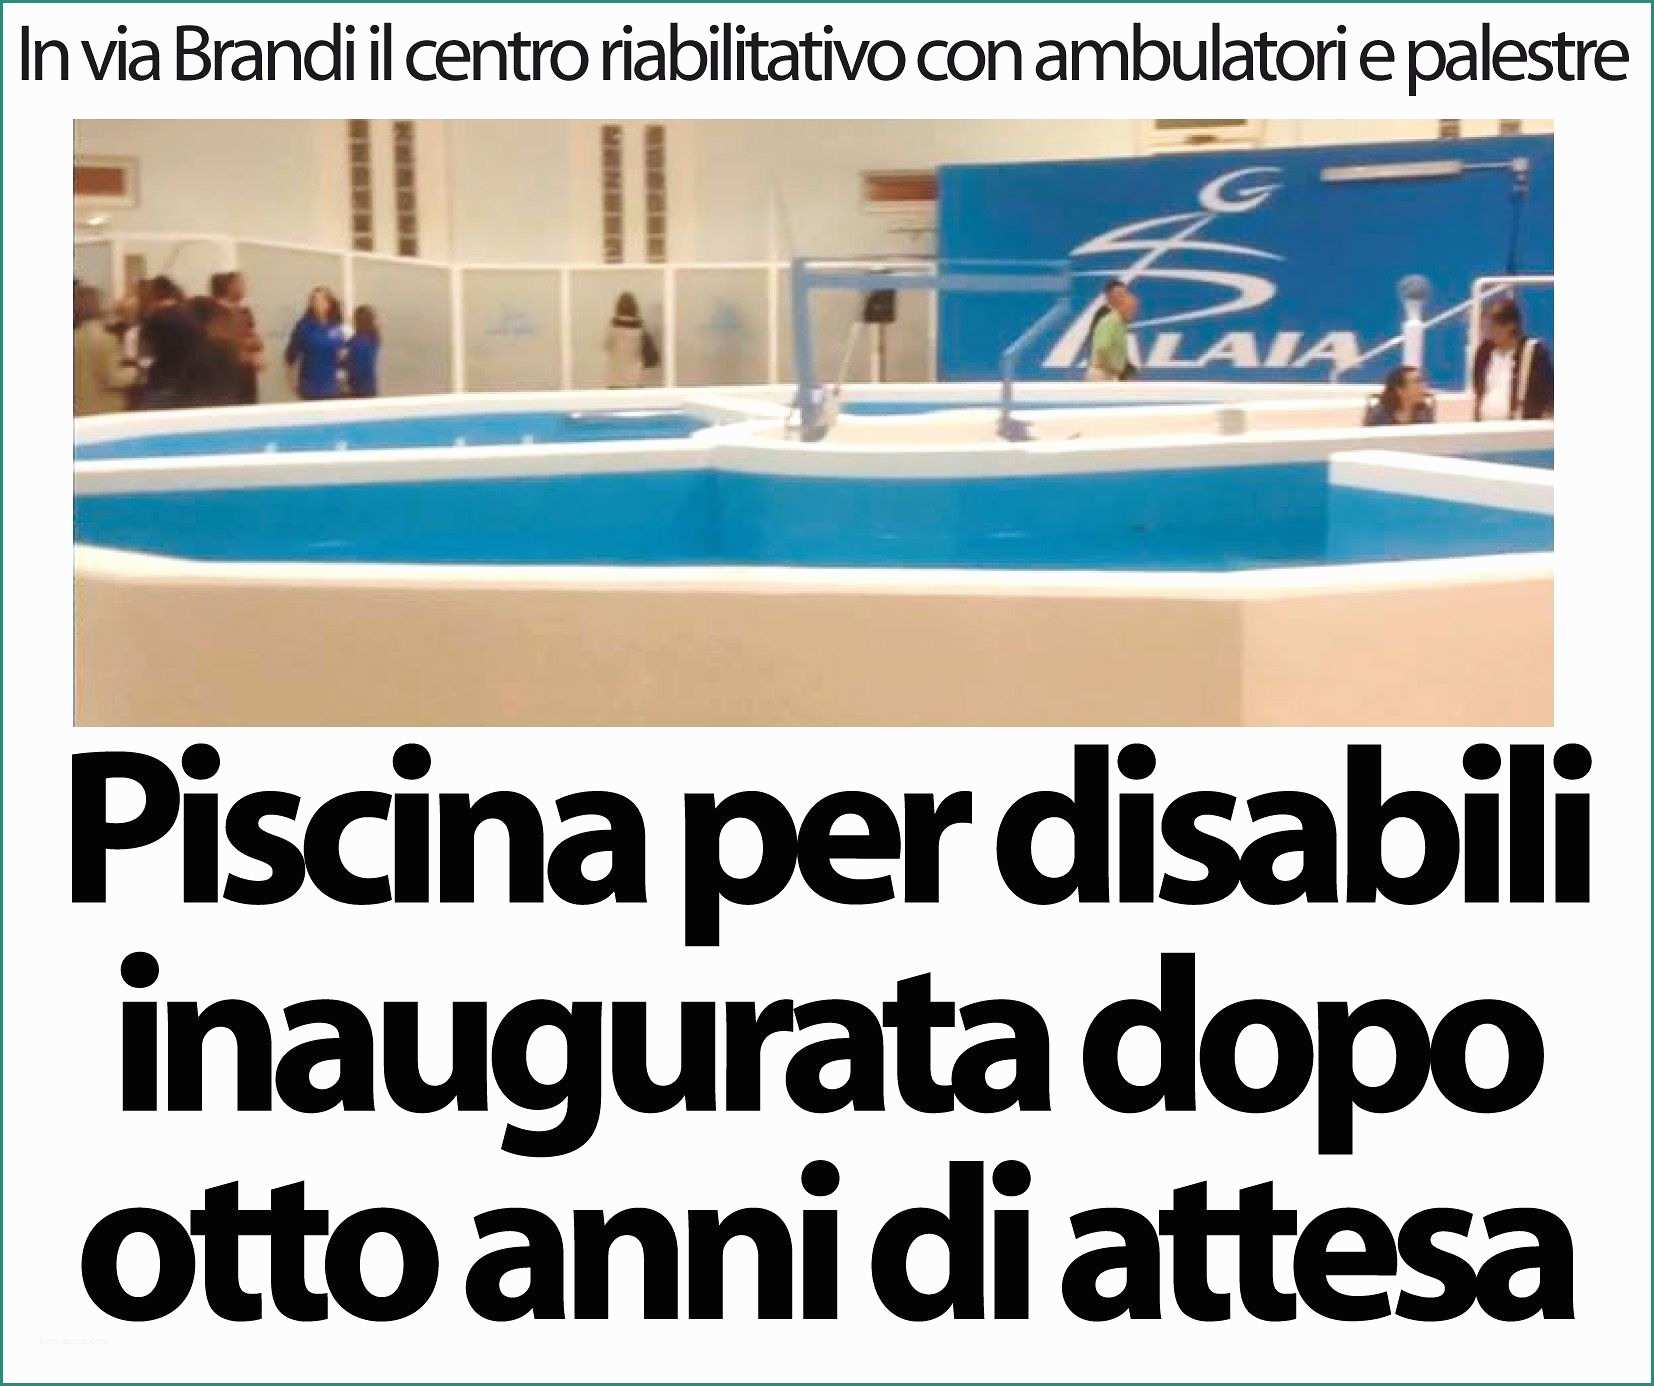 Carrozzine Per Disabili Usate E Piscina Milano Disabili Agnayfo = Galleria Di Design E Idee Per